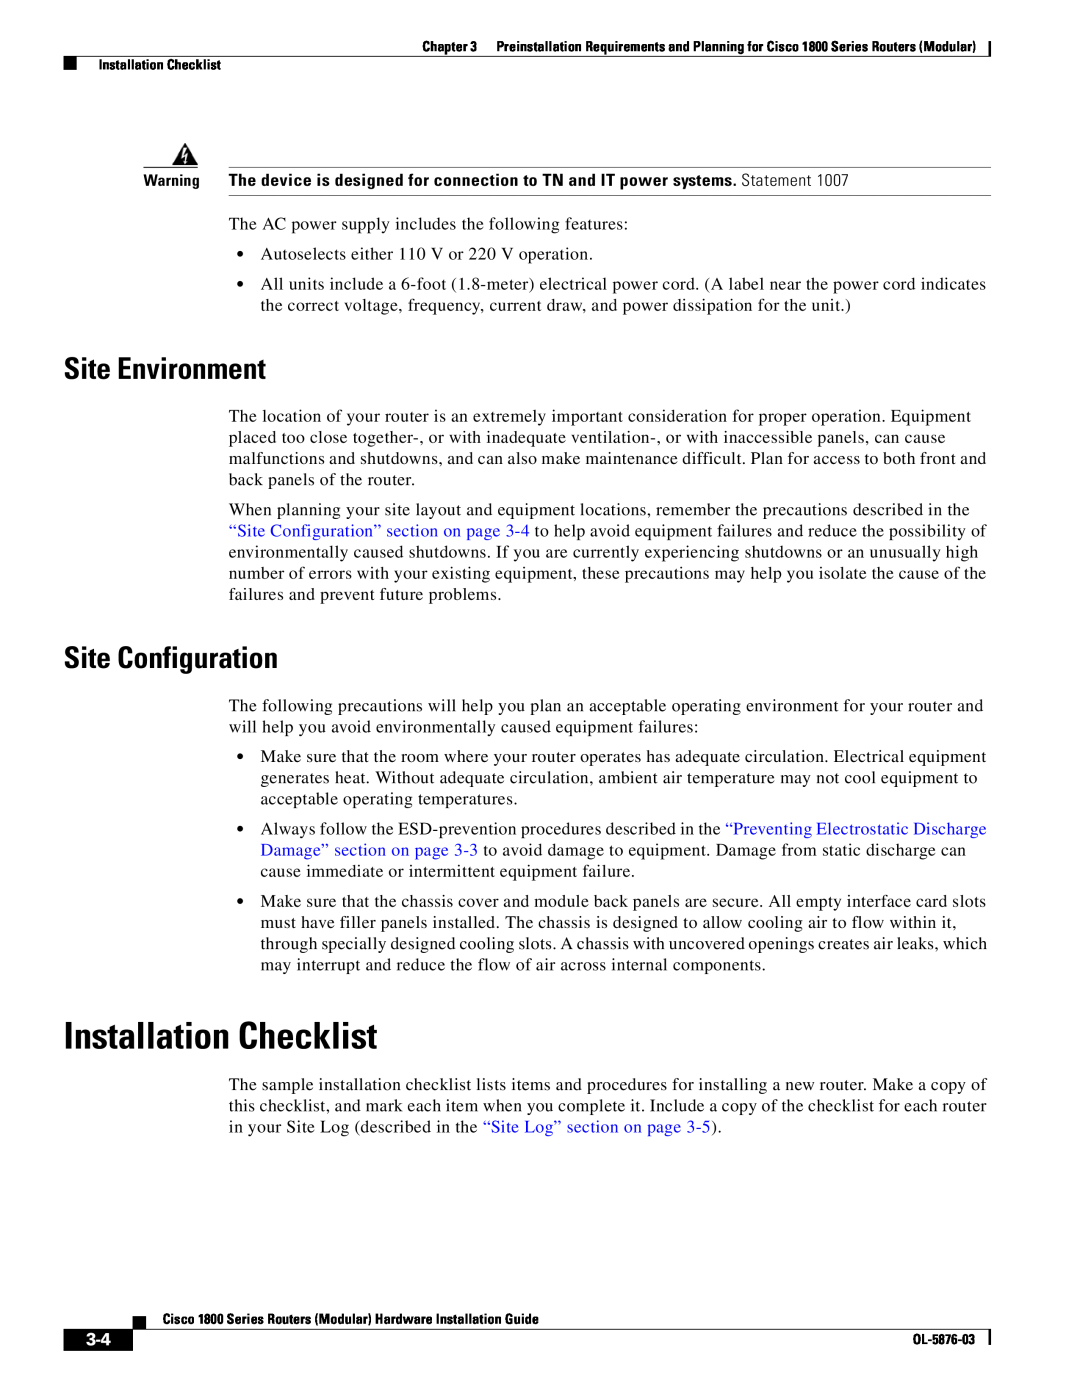 Cisco Systems CISCO1841-HSEC/K9-RF manual Installation Checklist, Site Environment, Site Configuration 